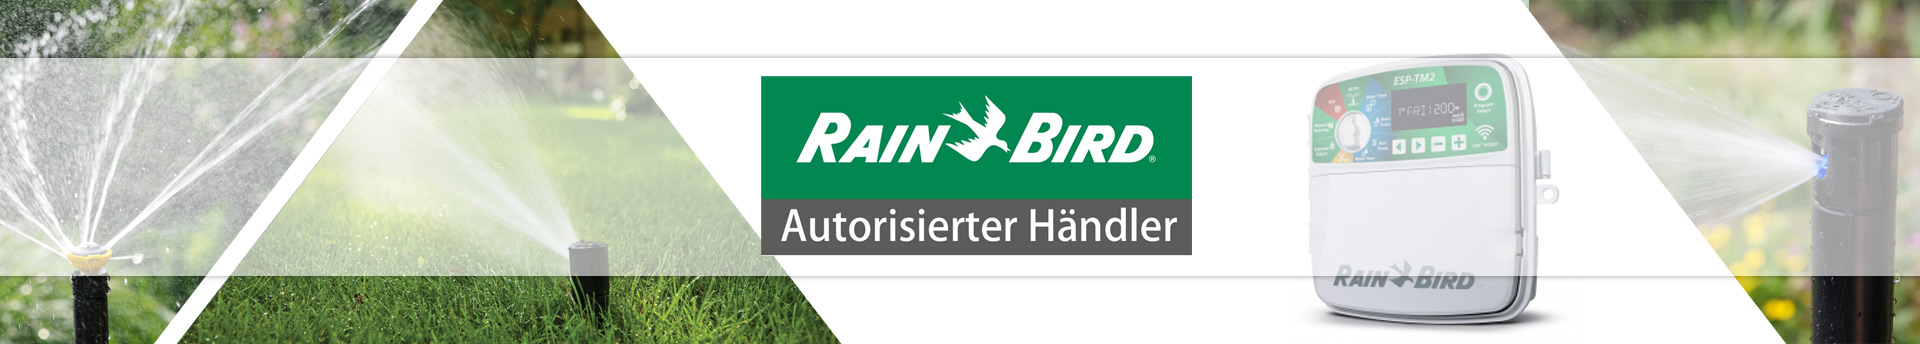 hersteller_rain_bird_2